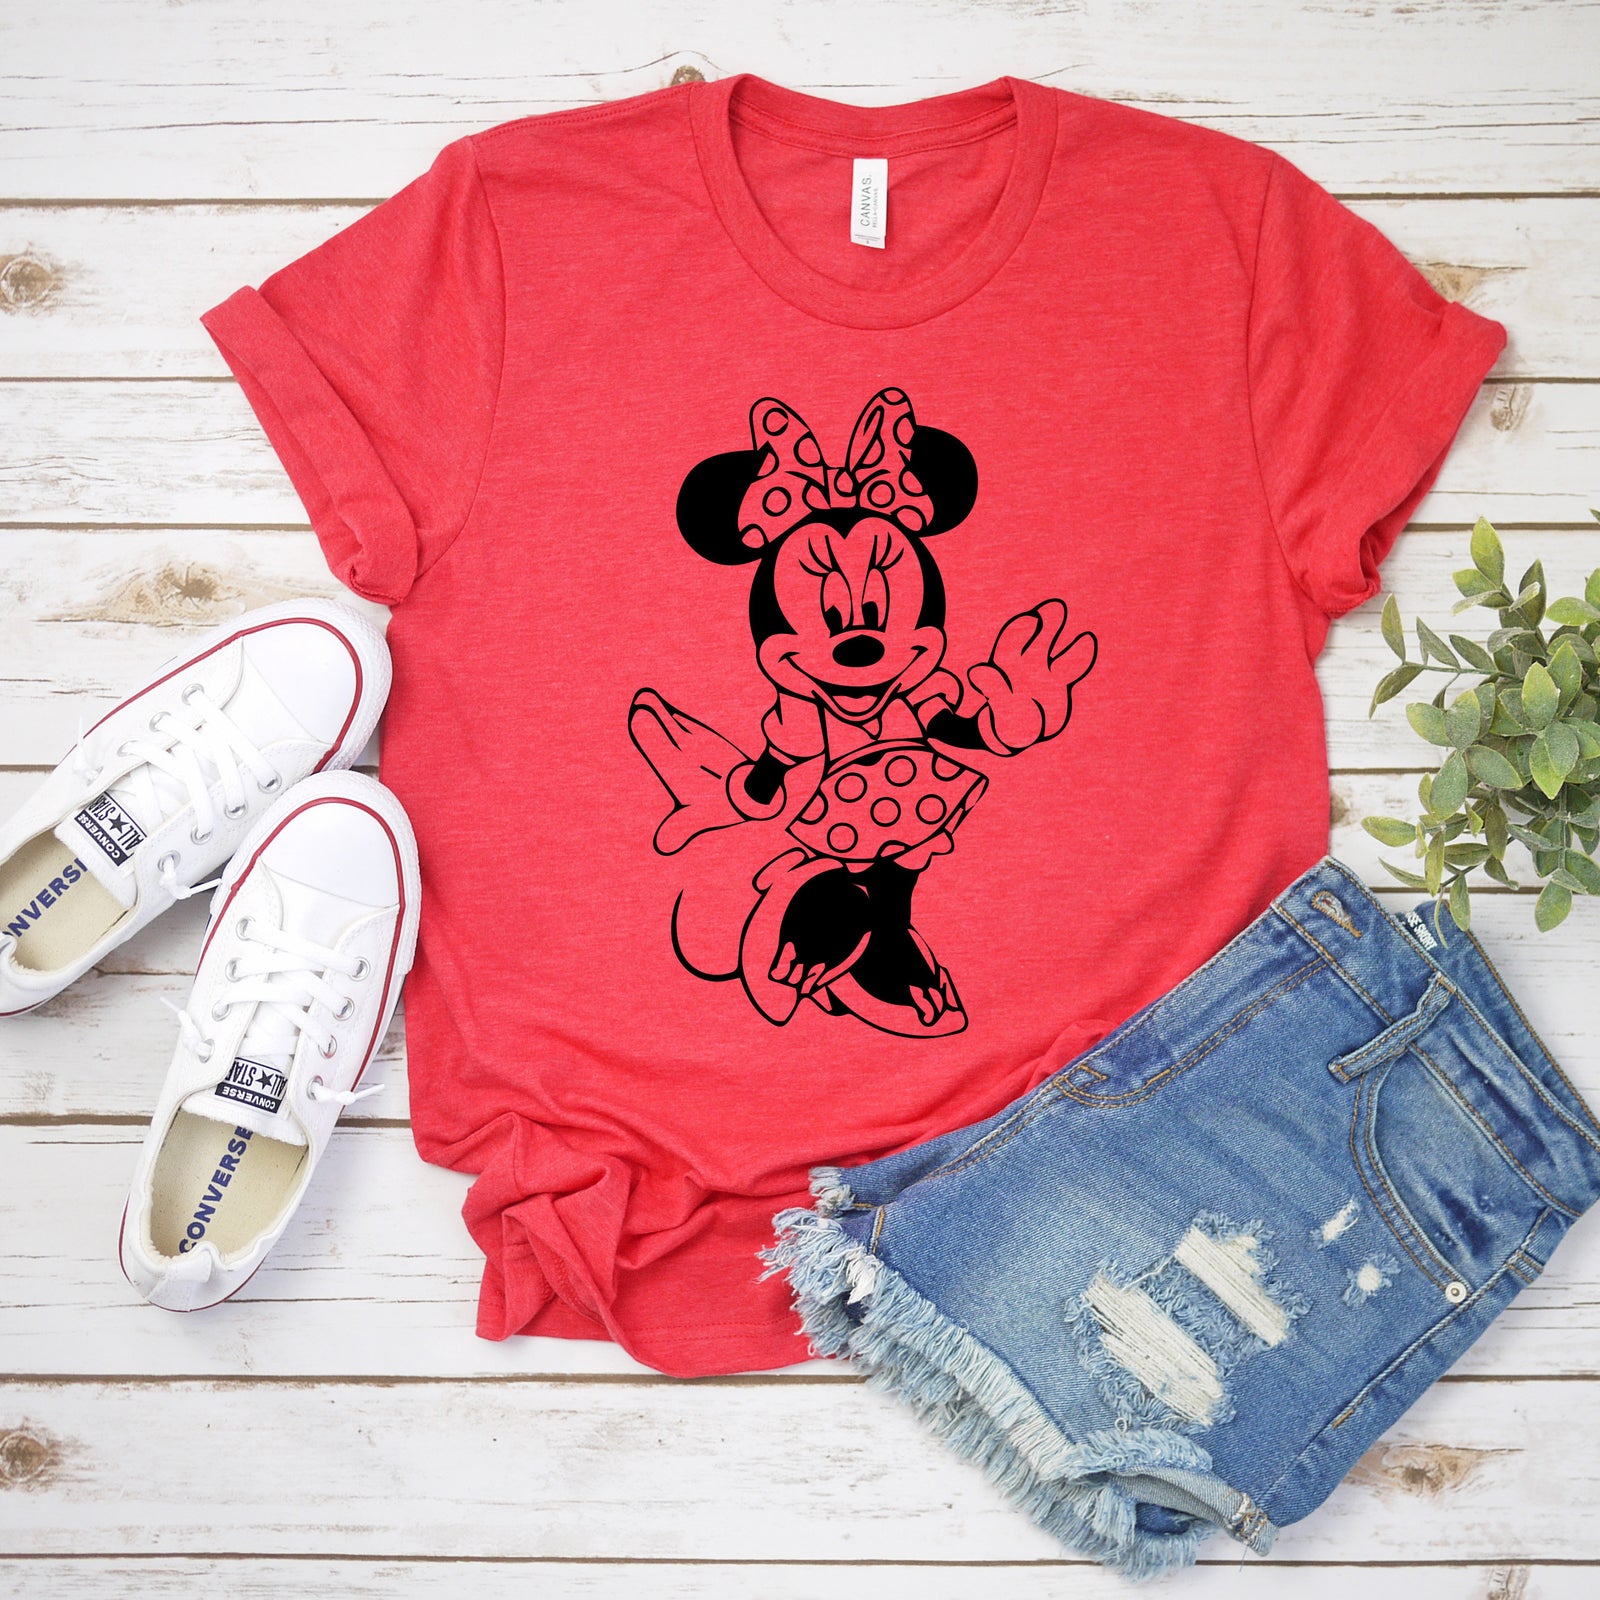 Full Body Minnie Mouse t shirt - Disney Trip Matching Shirts - Cute Minnie T Shirt